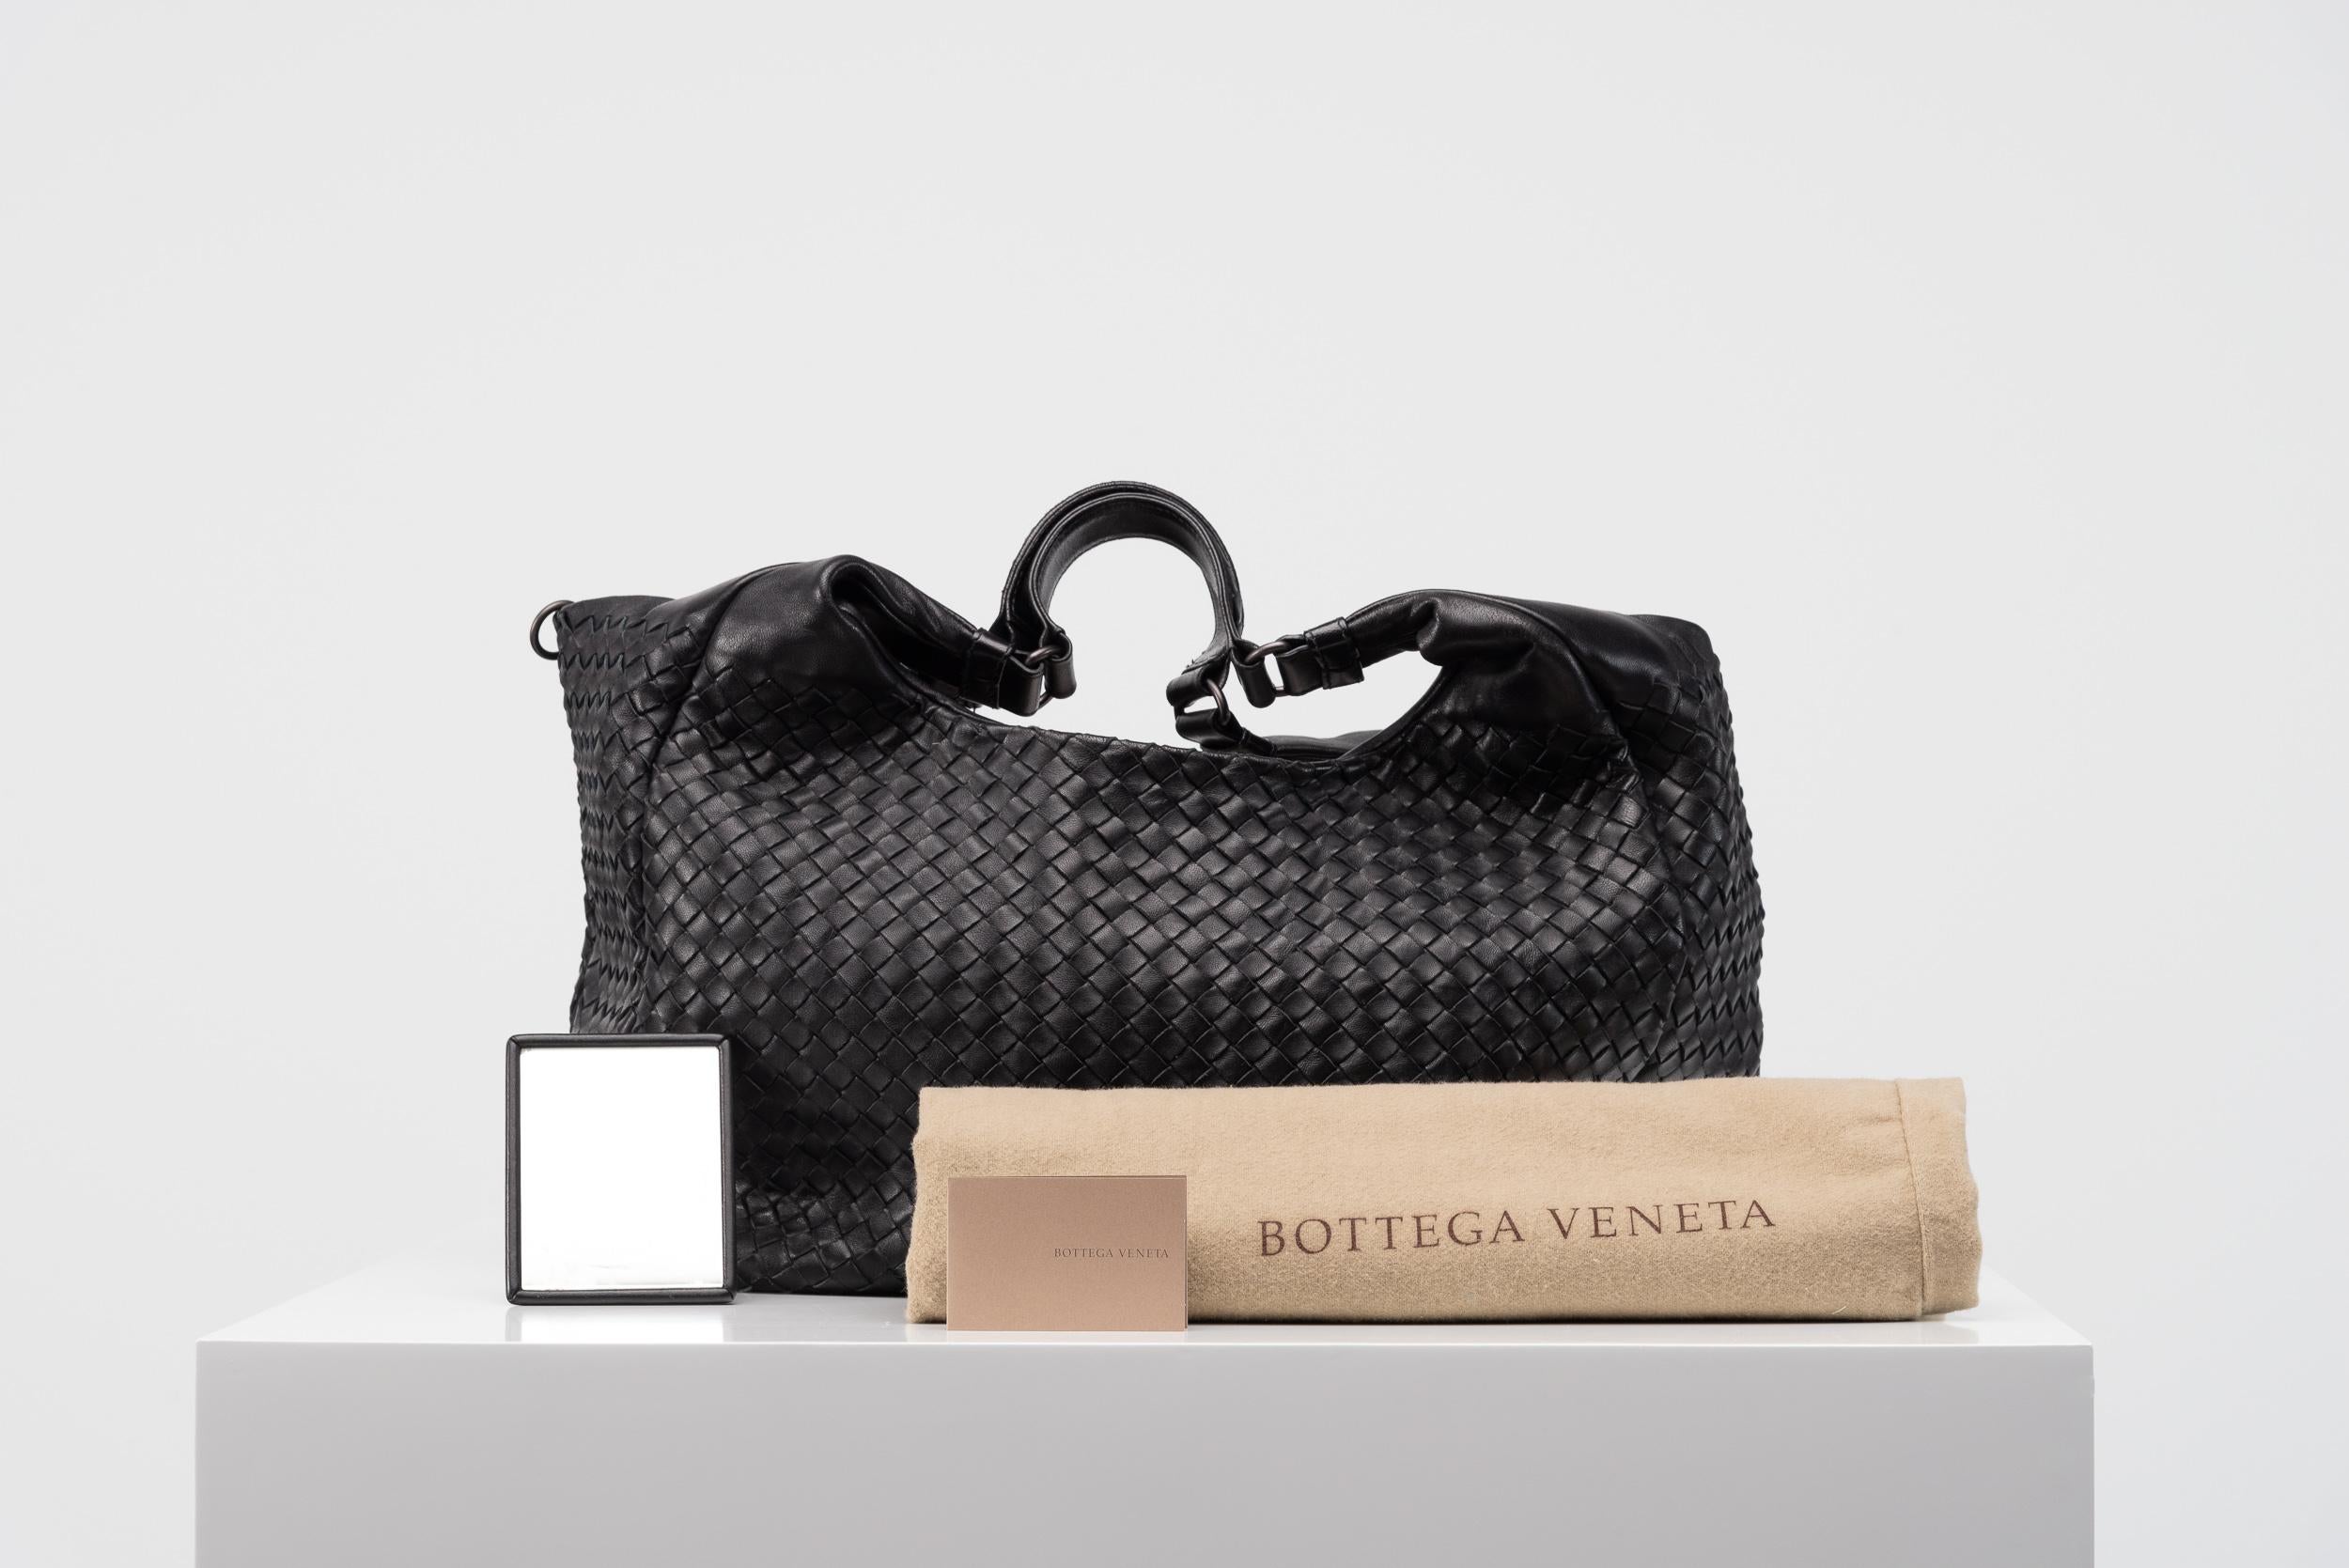 From the collection of SAVINETI we offer this Bottega Veneta Bag:
-    Brand: Bottega Veneta
-    Model: Intrecciato Campana Hobo
-    Condition: Good
-    Materials: nappa leather
-    Extras: dustbag

Crafted in Bottega Veneta's signature